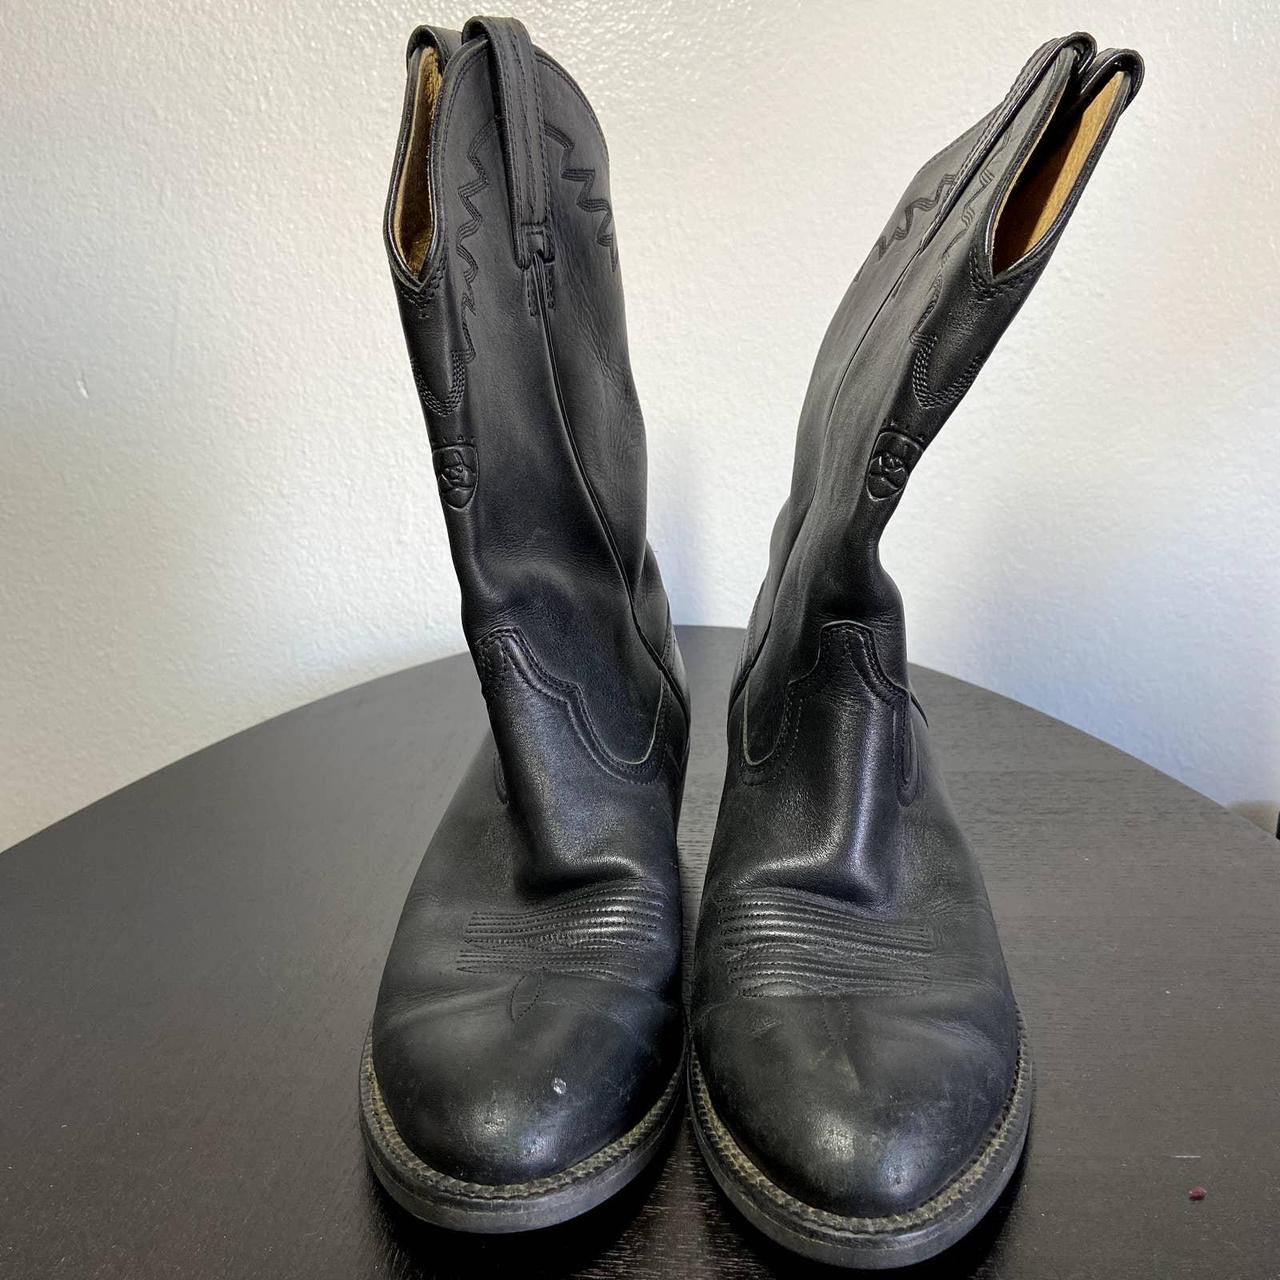 Ariat Sedona Western Boots duratread full-grain... - Depop